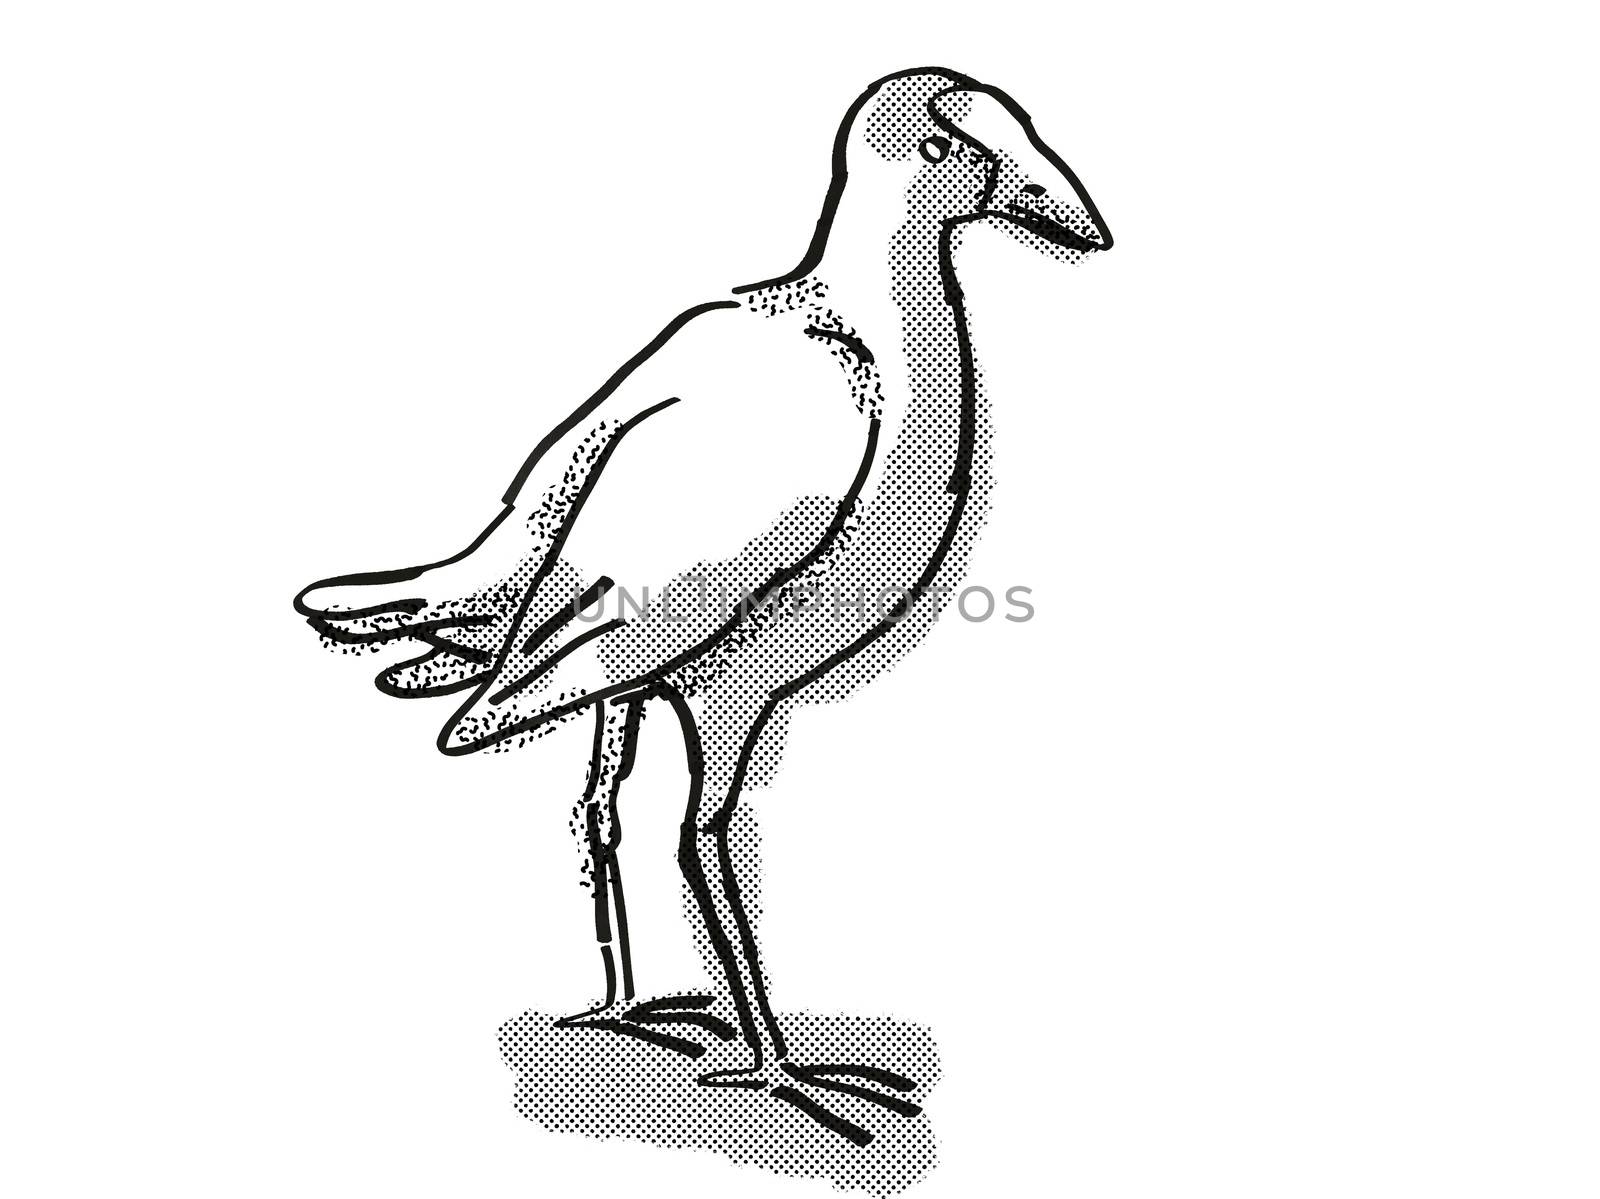 pukeko New Zealand Bird Cartoon Retro Drawing by patrimonio